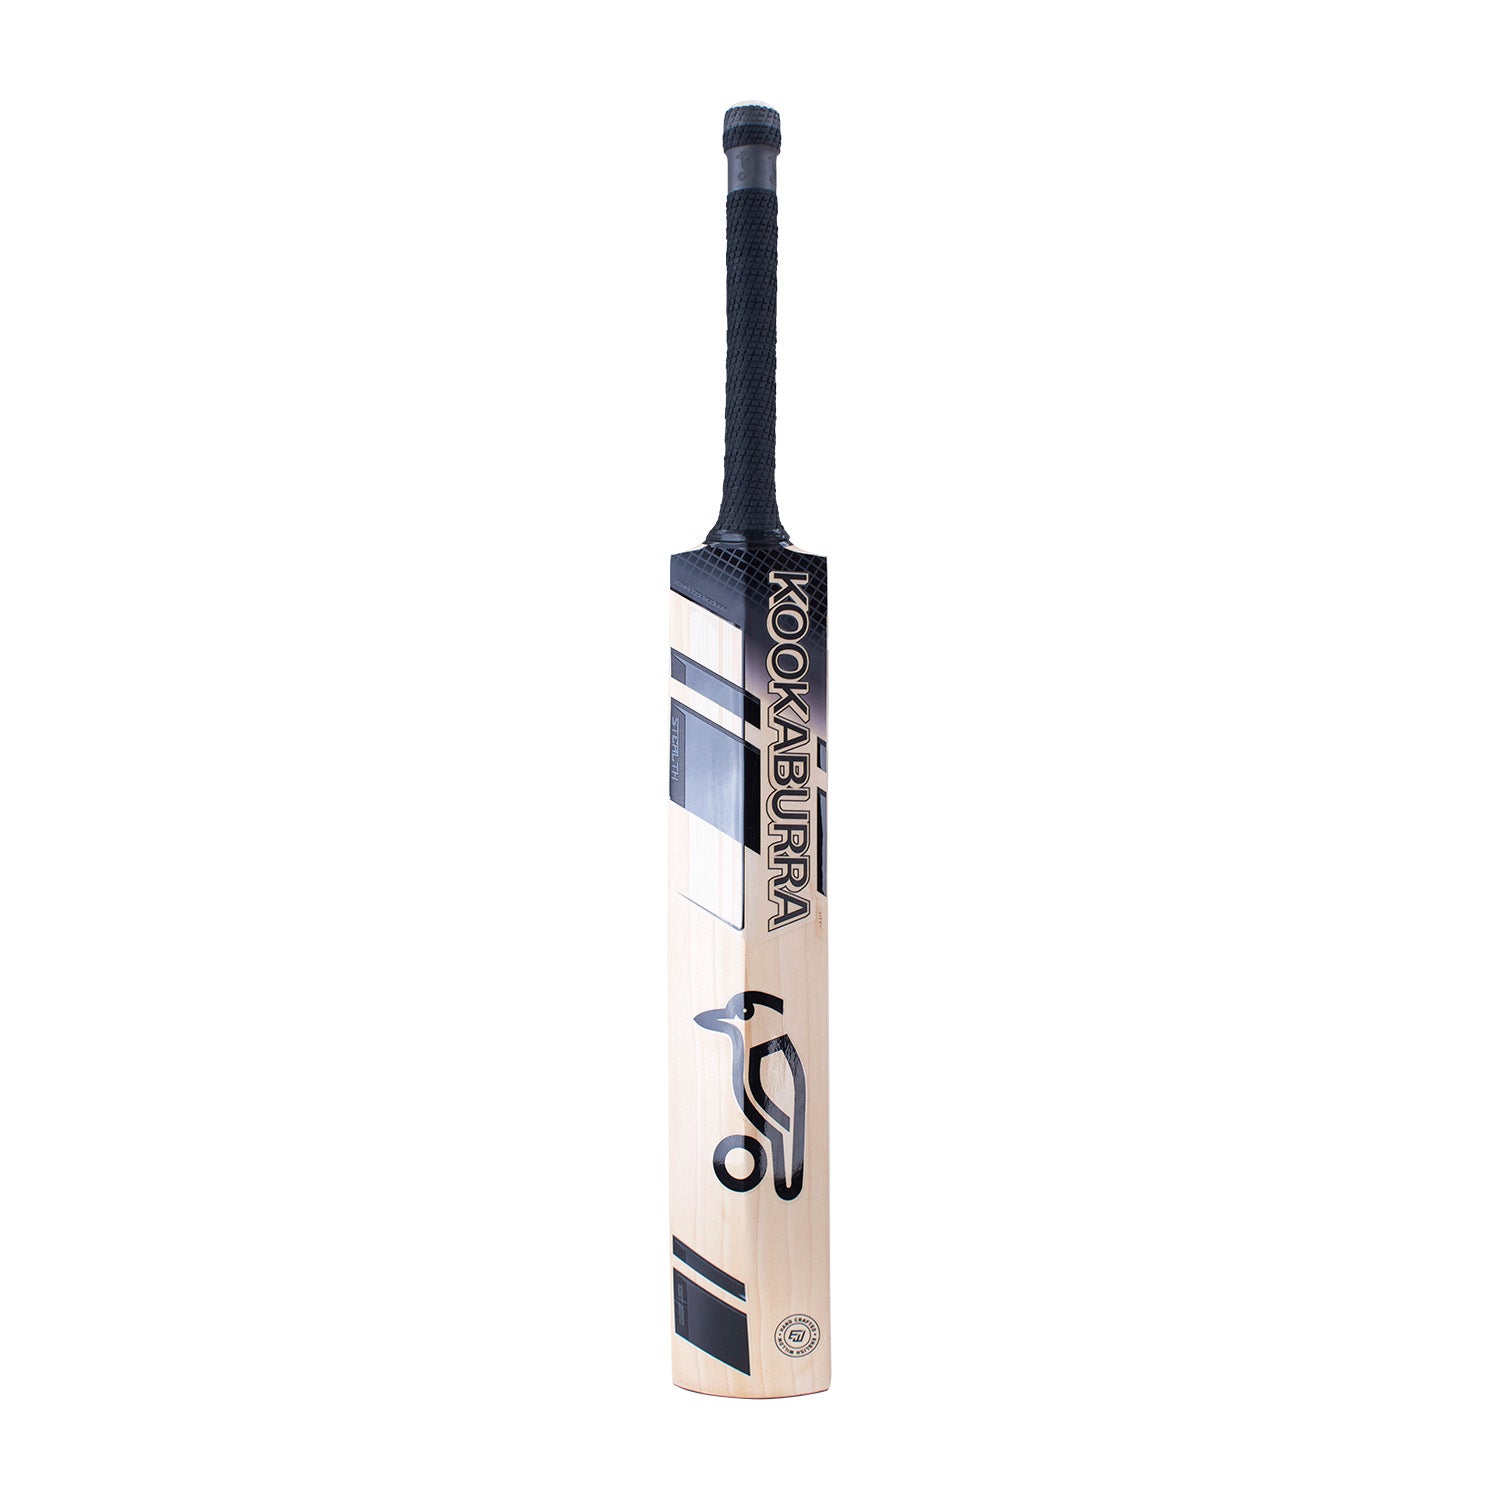 Kookaburra Stealth 3.1 Junior Cricket Bat